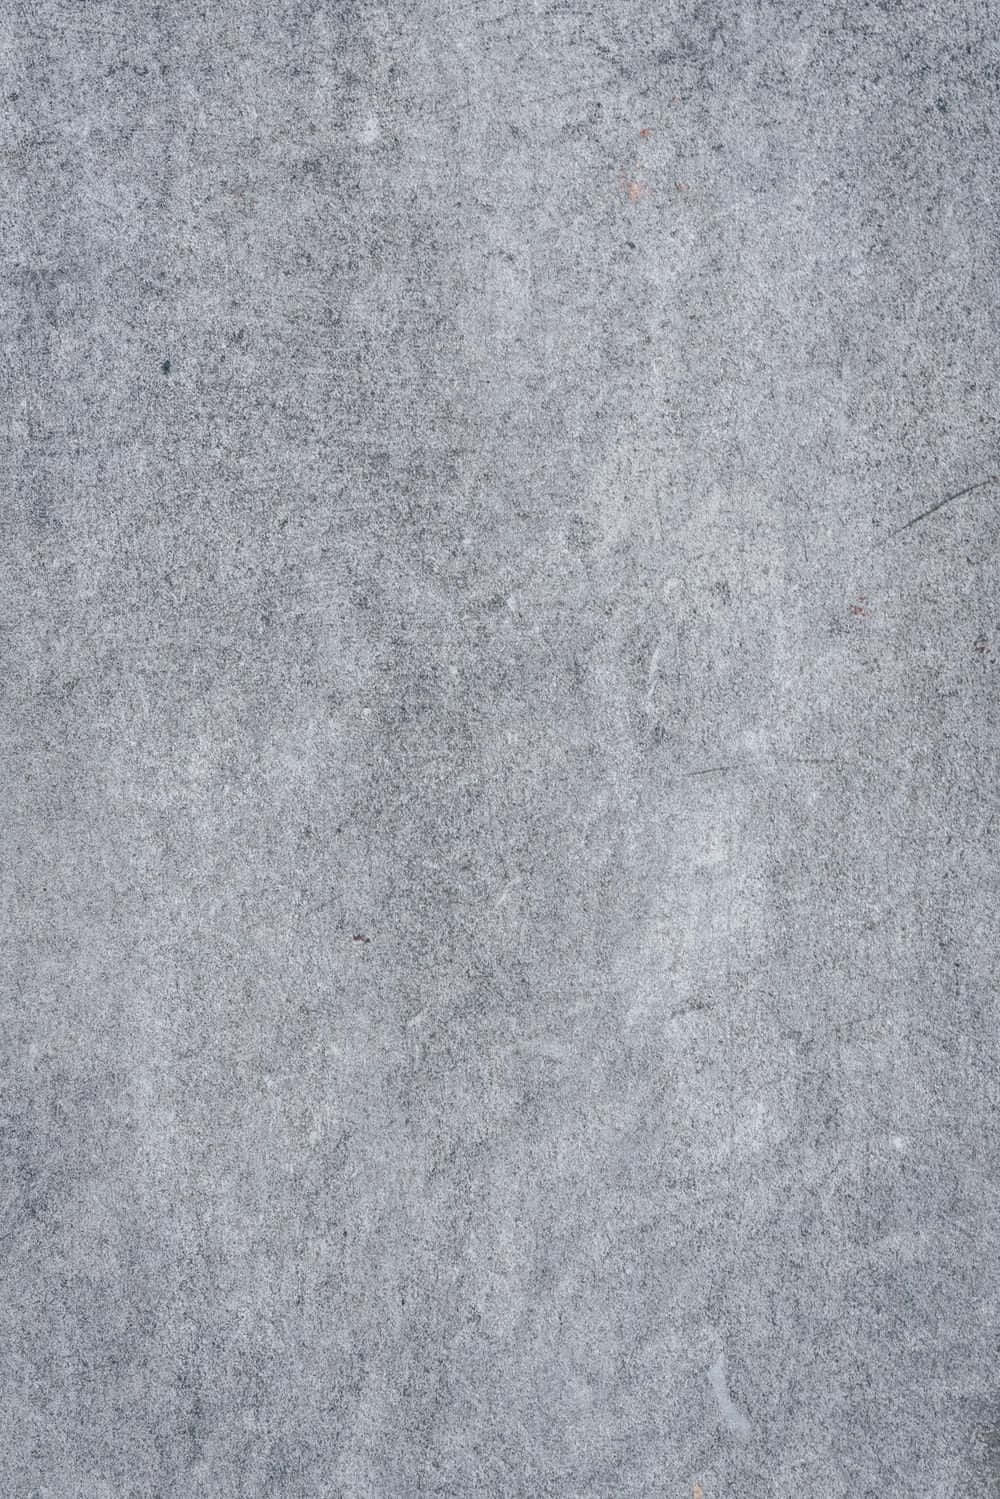 Light Grey Background Rough Concrete Surface